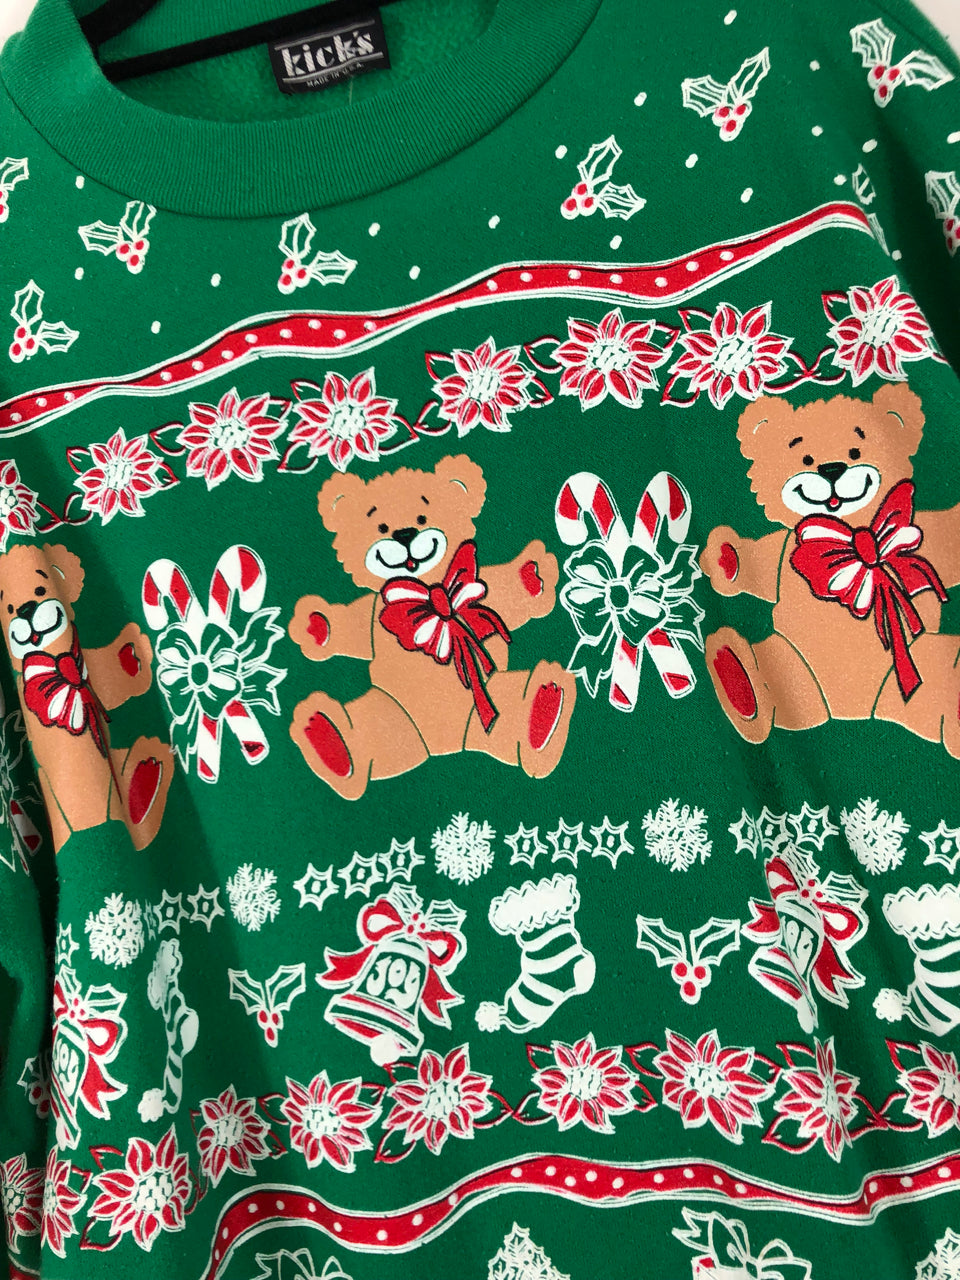 Kick's Holiday Sweatshirt